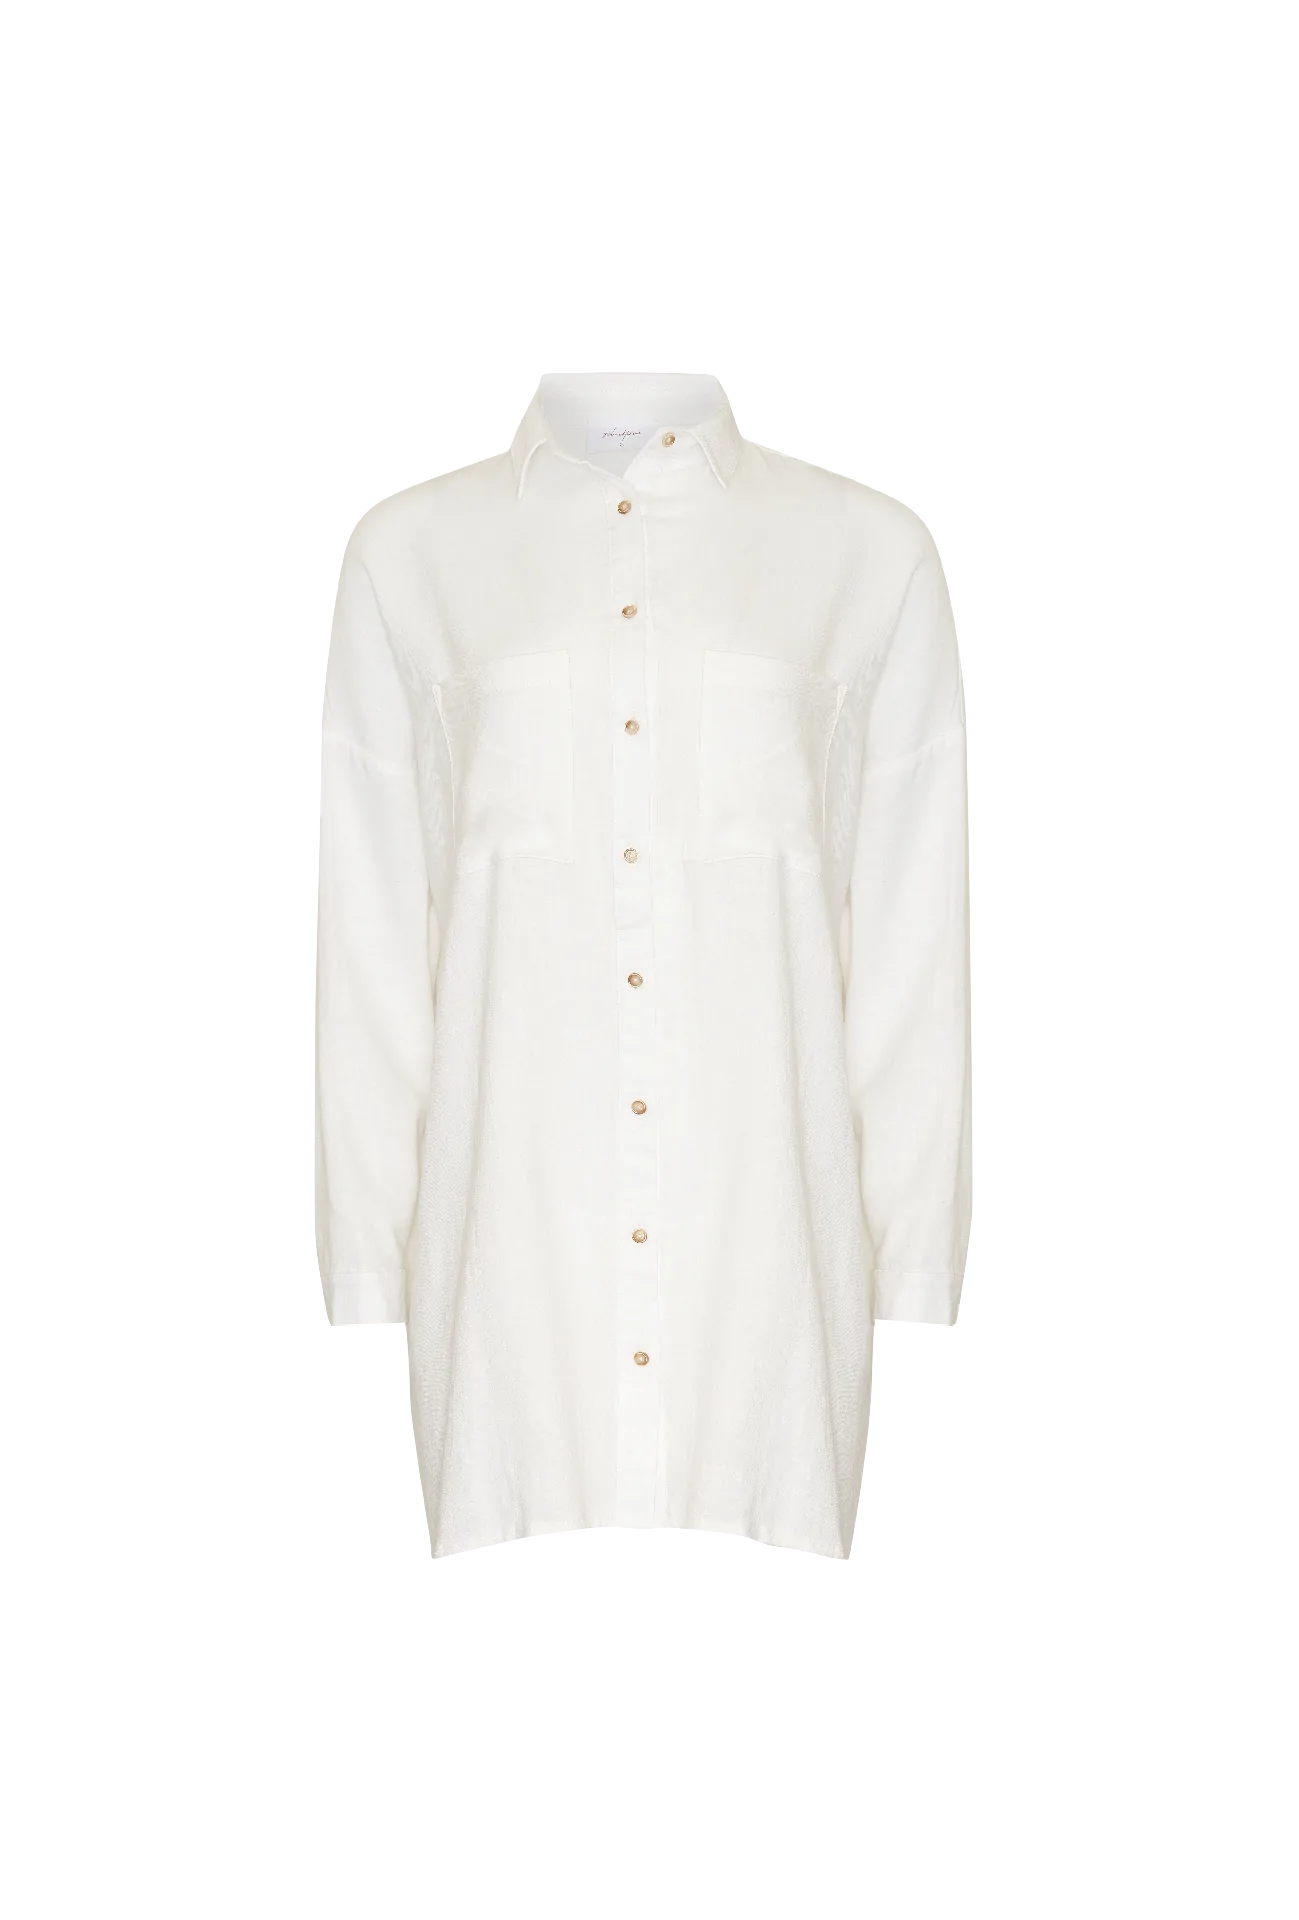 FRANCIA SHIRT DRESS - WHITE